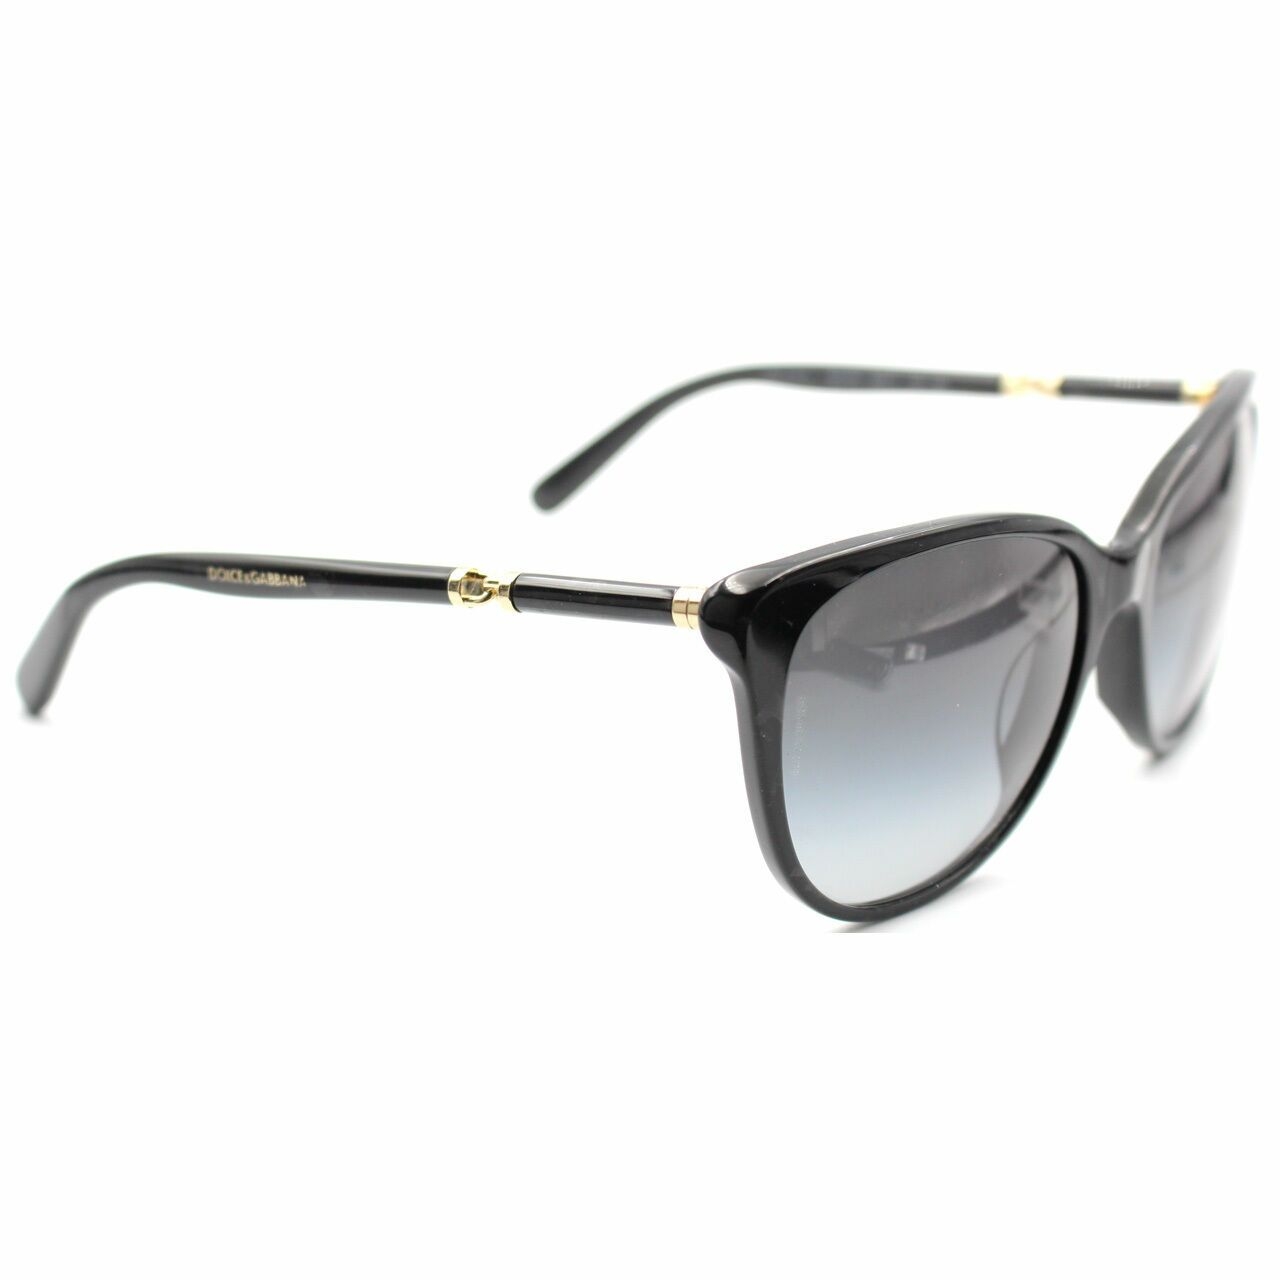 Dolce & Gabbana Black Eyeglasses